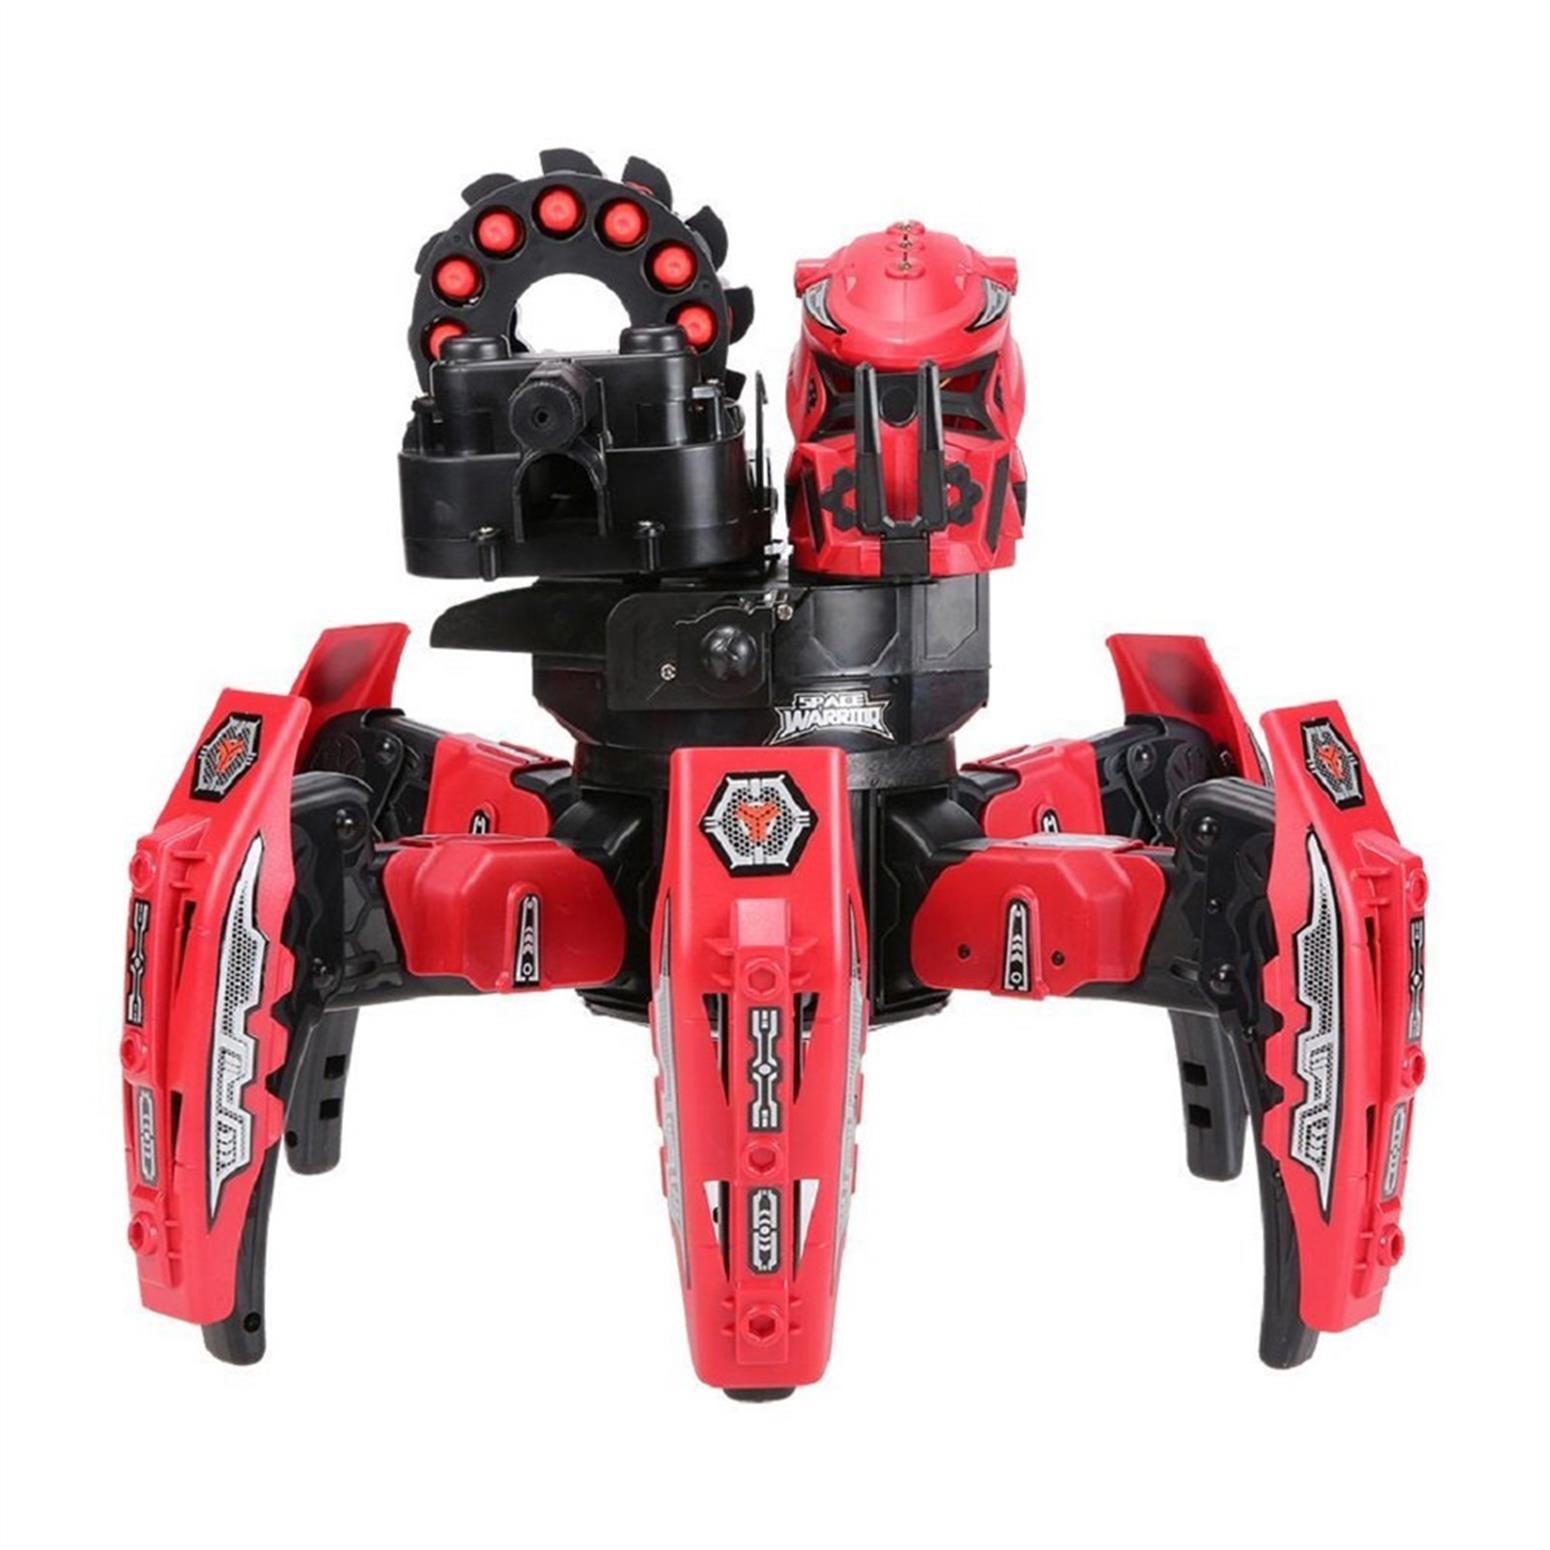 EMOB Dark Mars Spider Space Warrior Blaster Fighting Robot Remote Control Toy with 2 in 1 Disc & Darts Launche